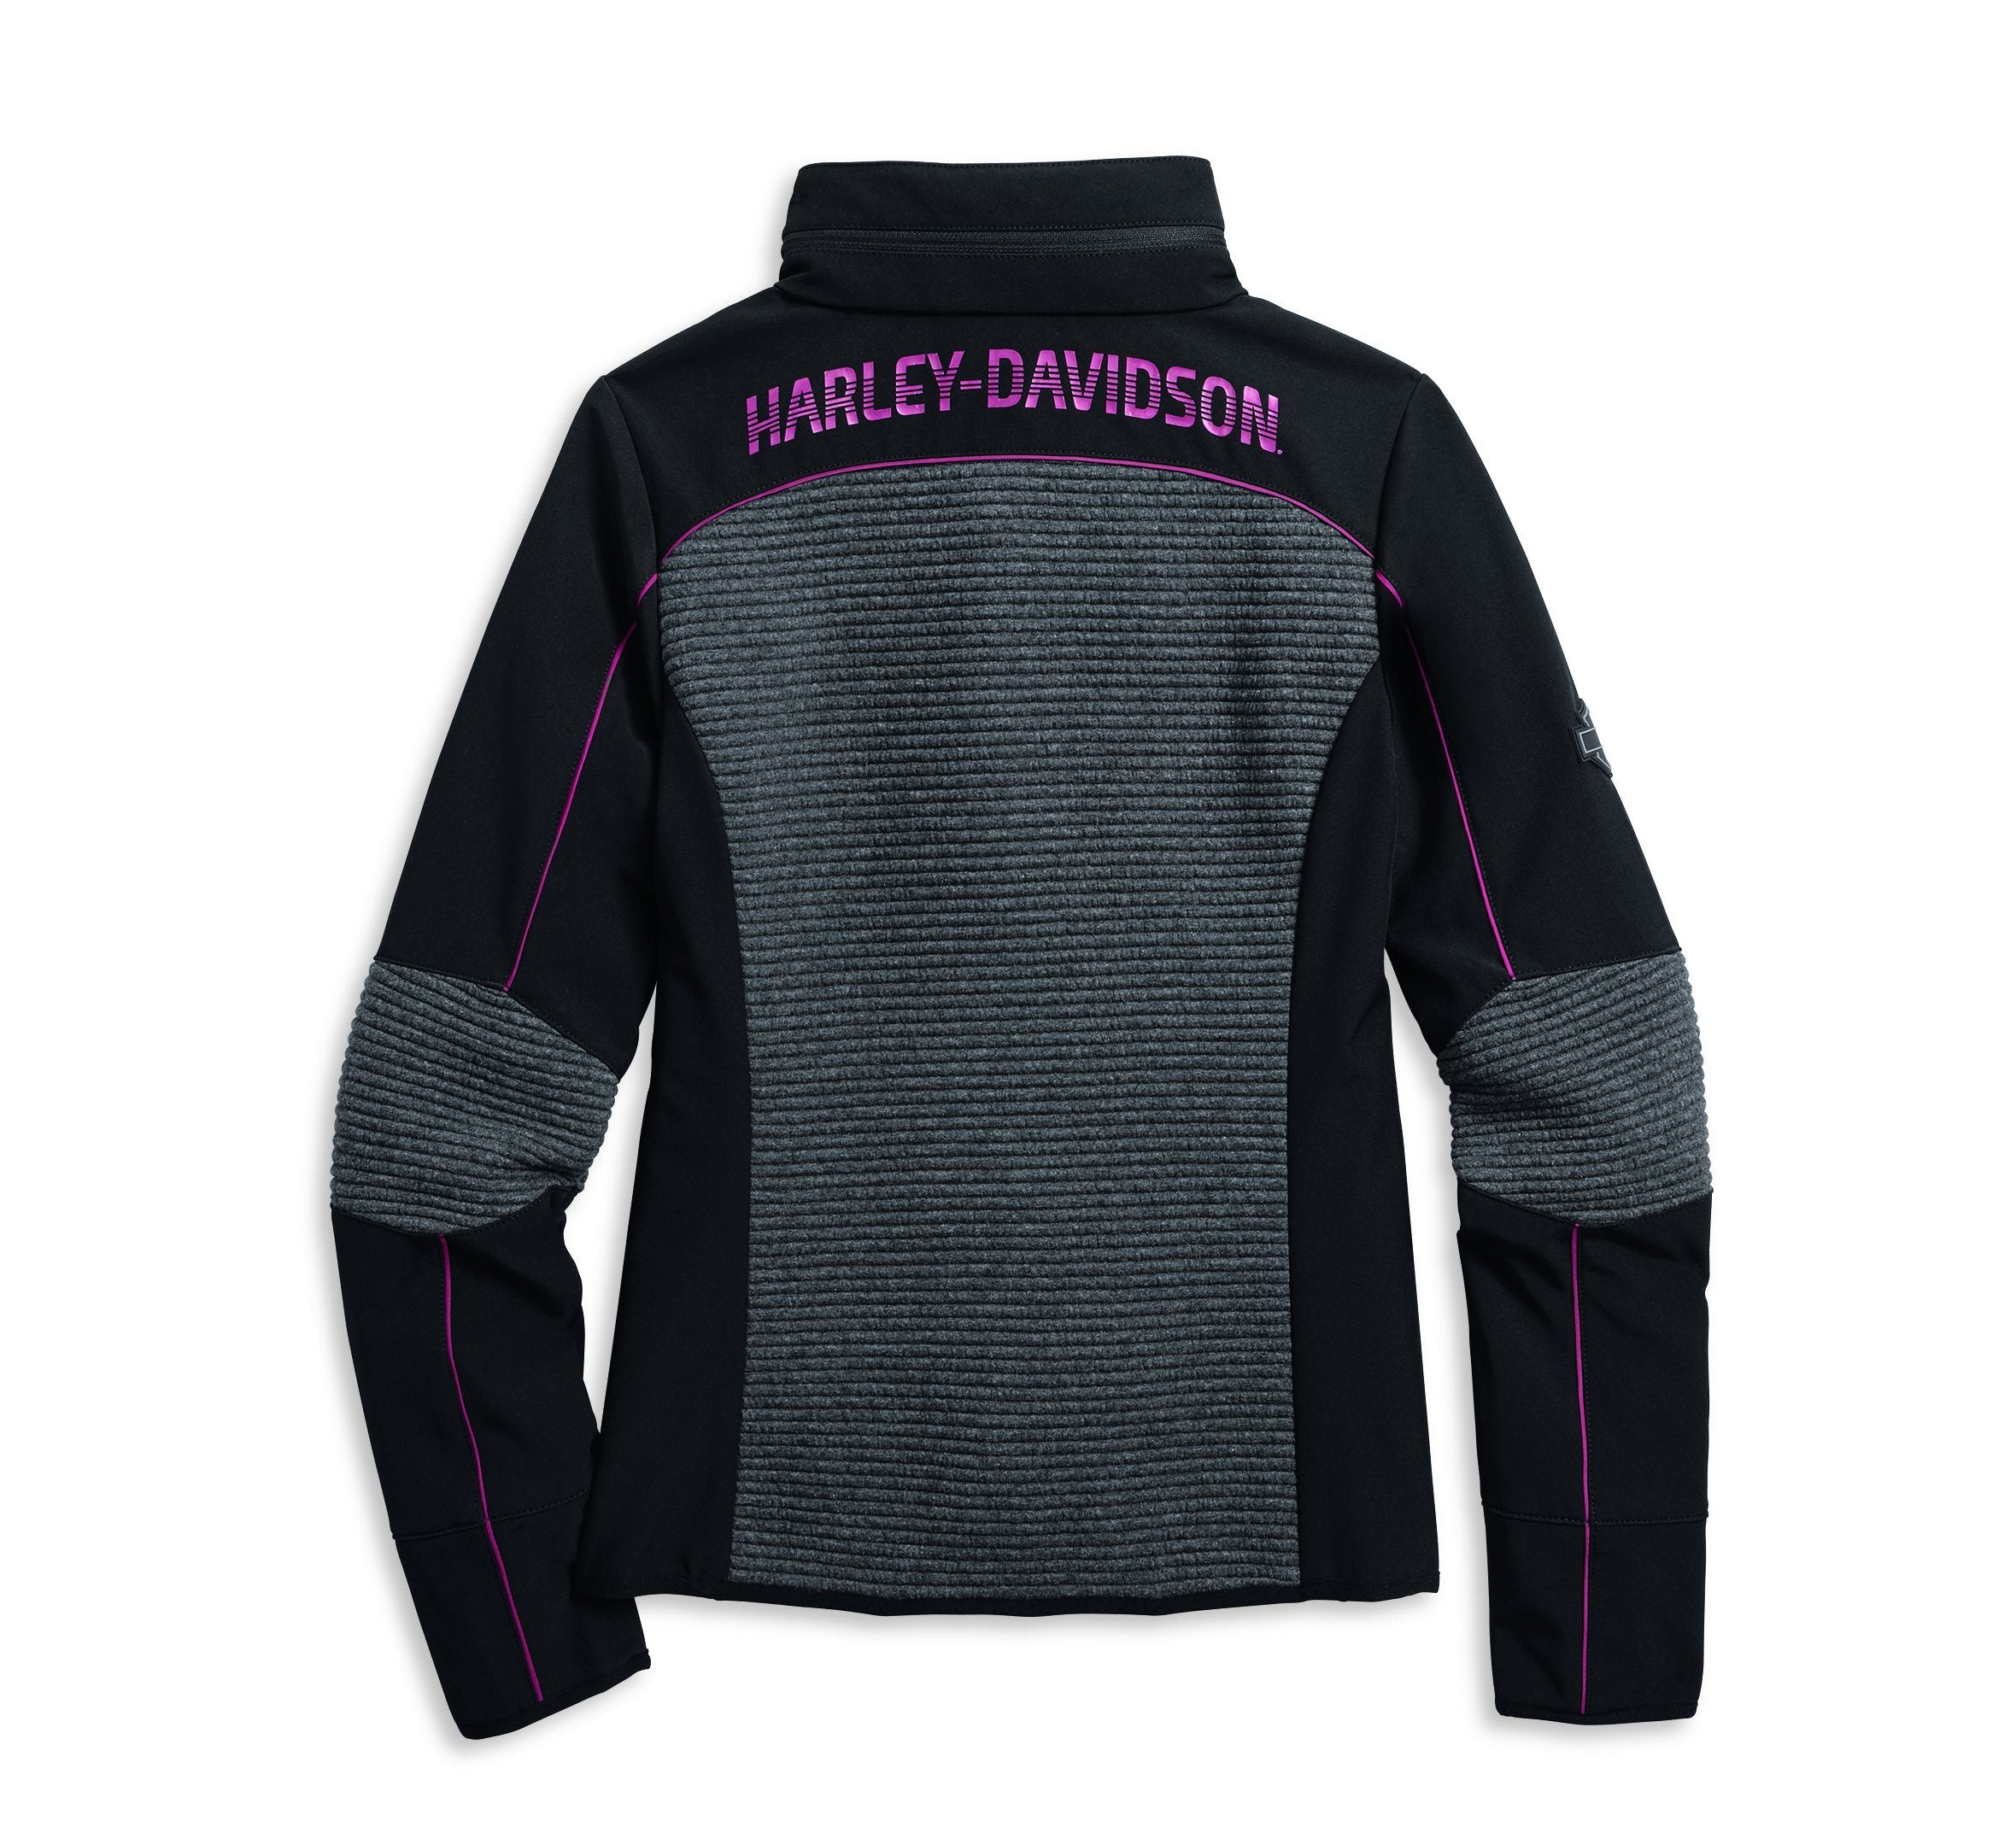 Harley-Davidson Women's Mixed Media Textured Knit Jacket - 97409-20VW